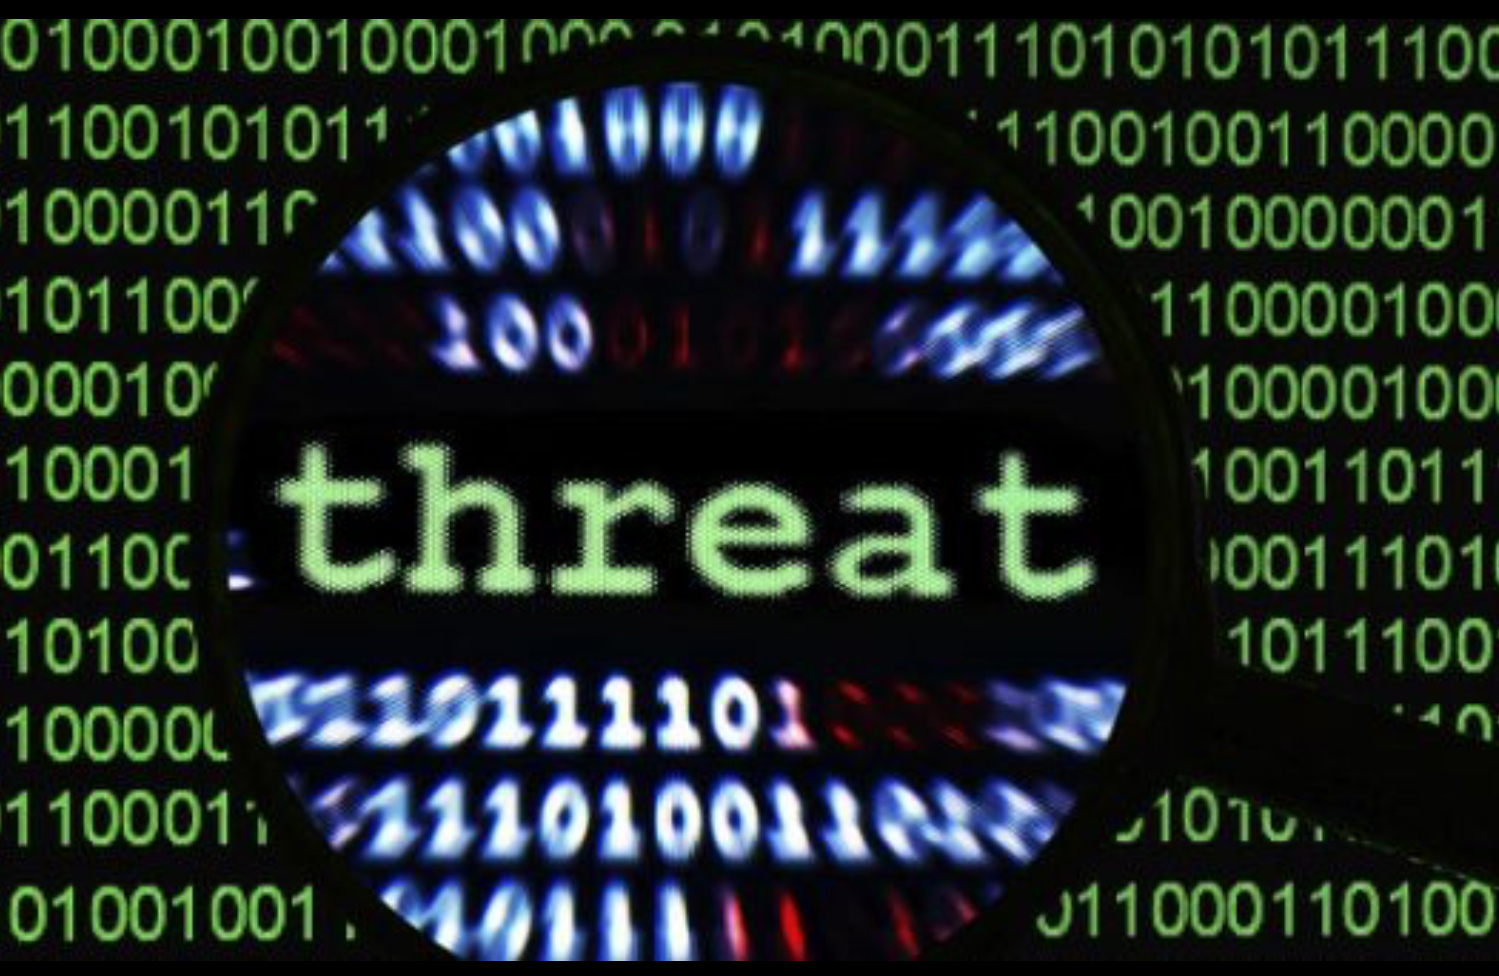 threat detection stocks